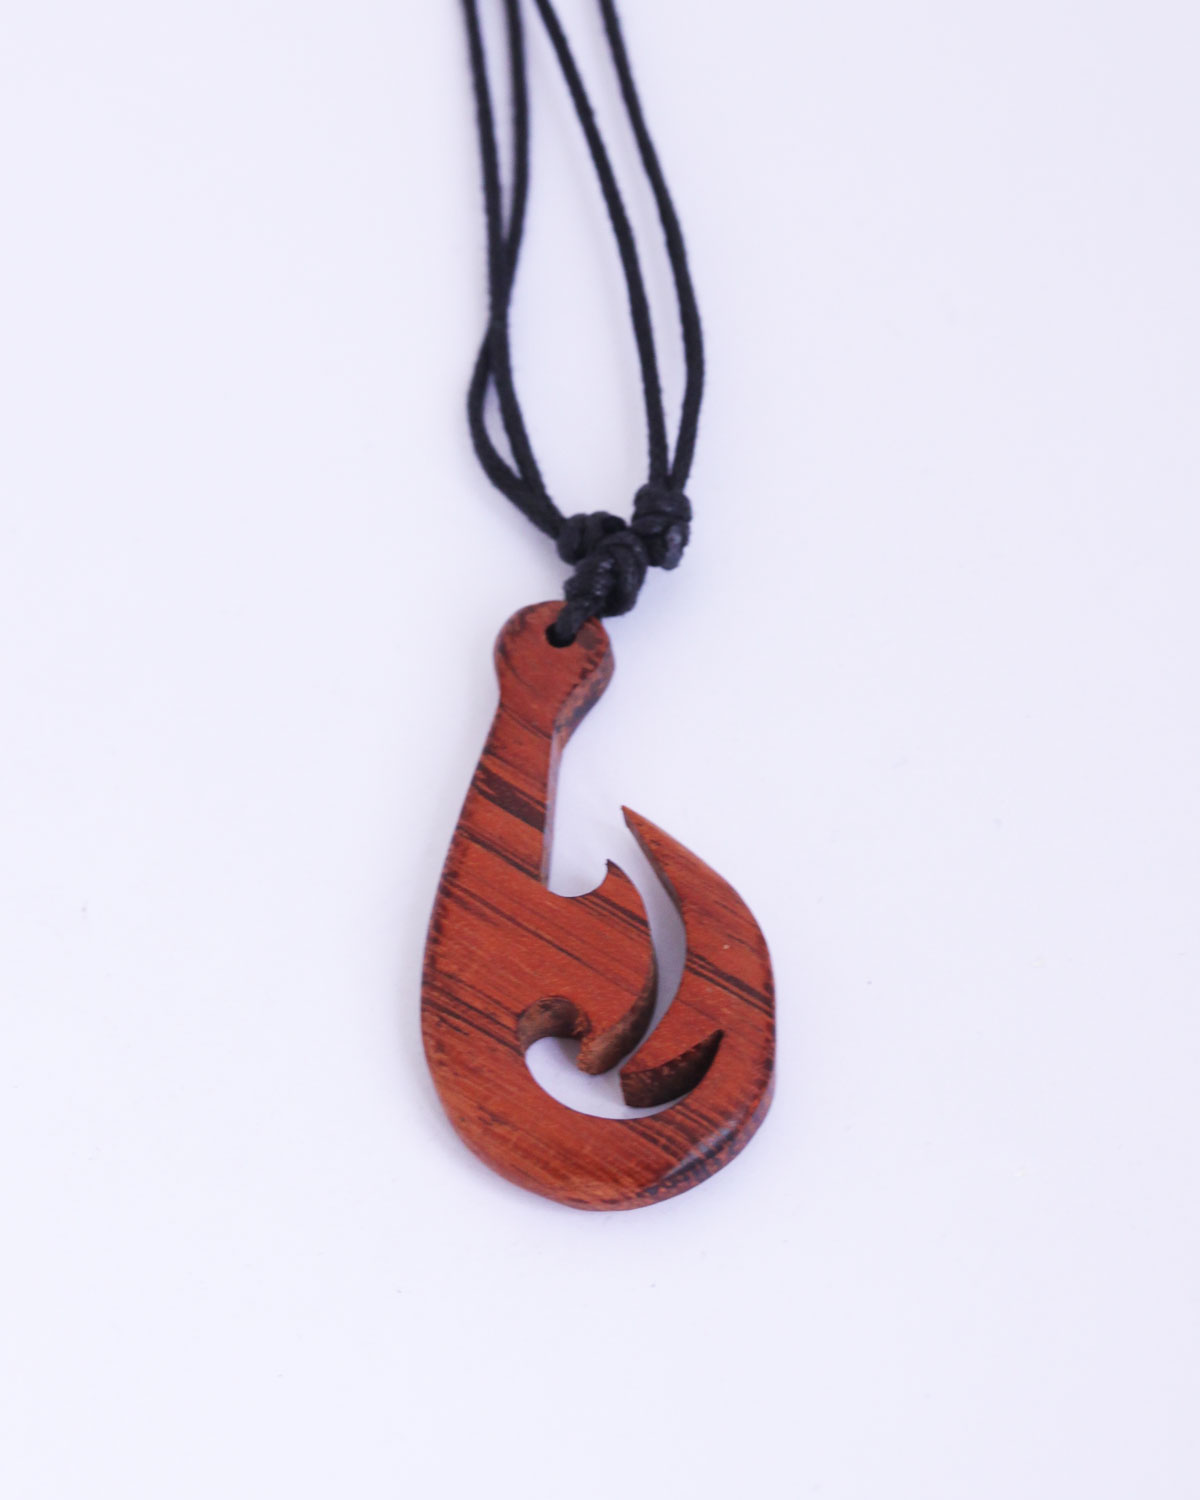 https://aucklandbeads.com/wp-content/uploads/377-230-Fish-hook-wood-pendant-with-sliding-cord.jpg